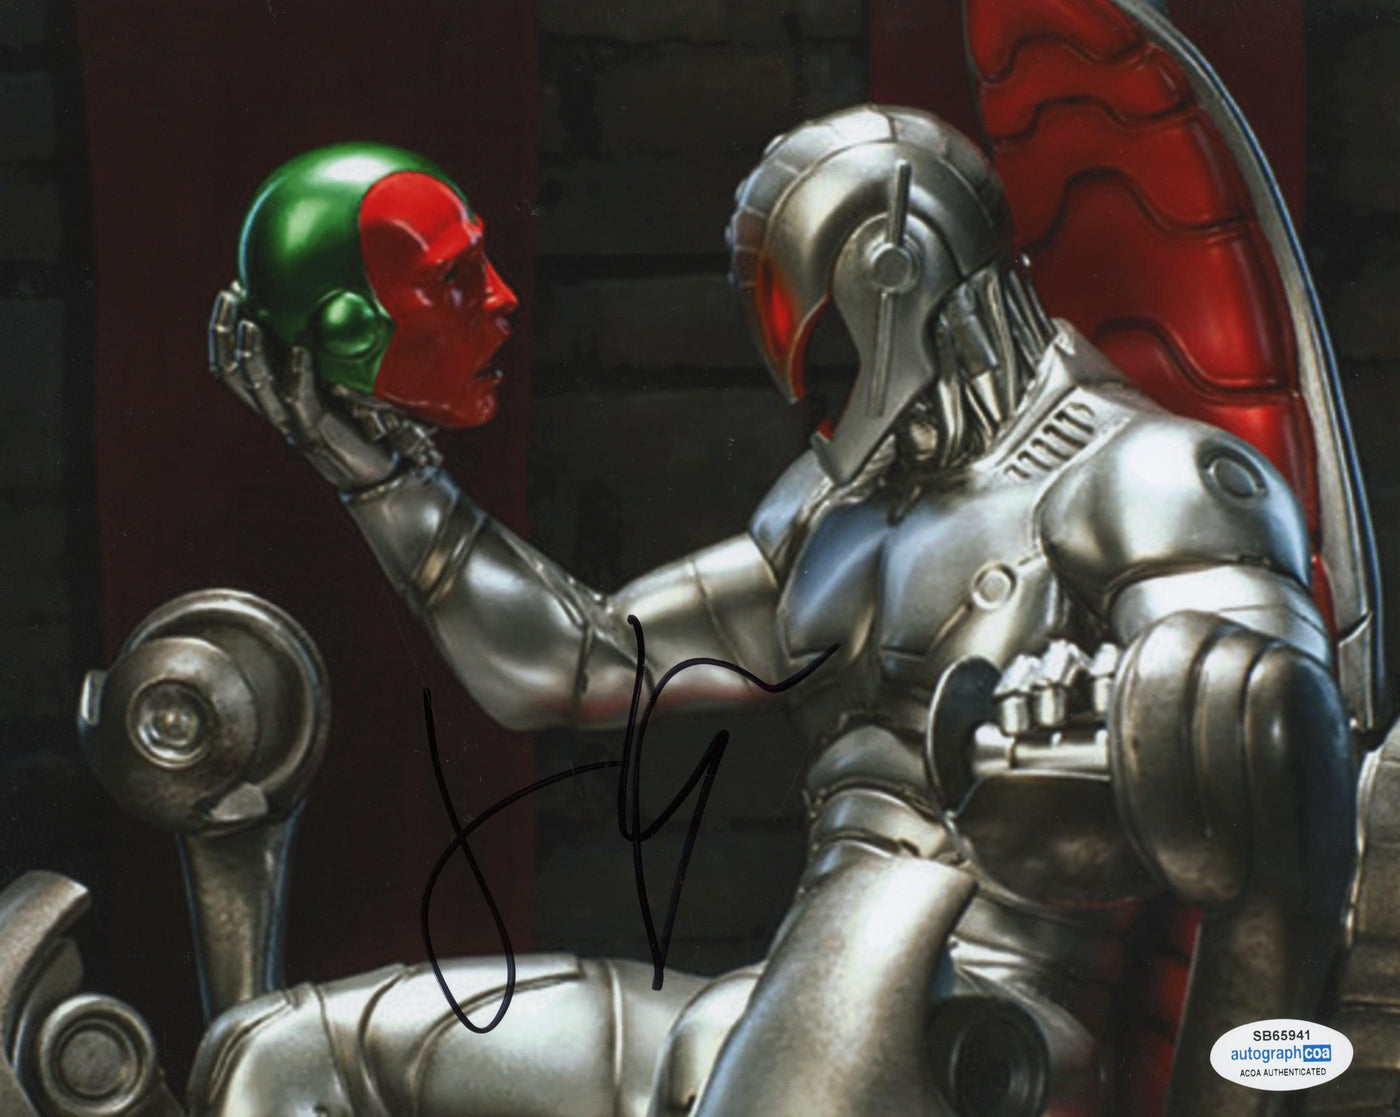 James Spader Autographed 8x10 Photo Marvel Avengers Ultron Signed ACOA #5